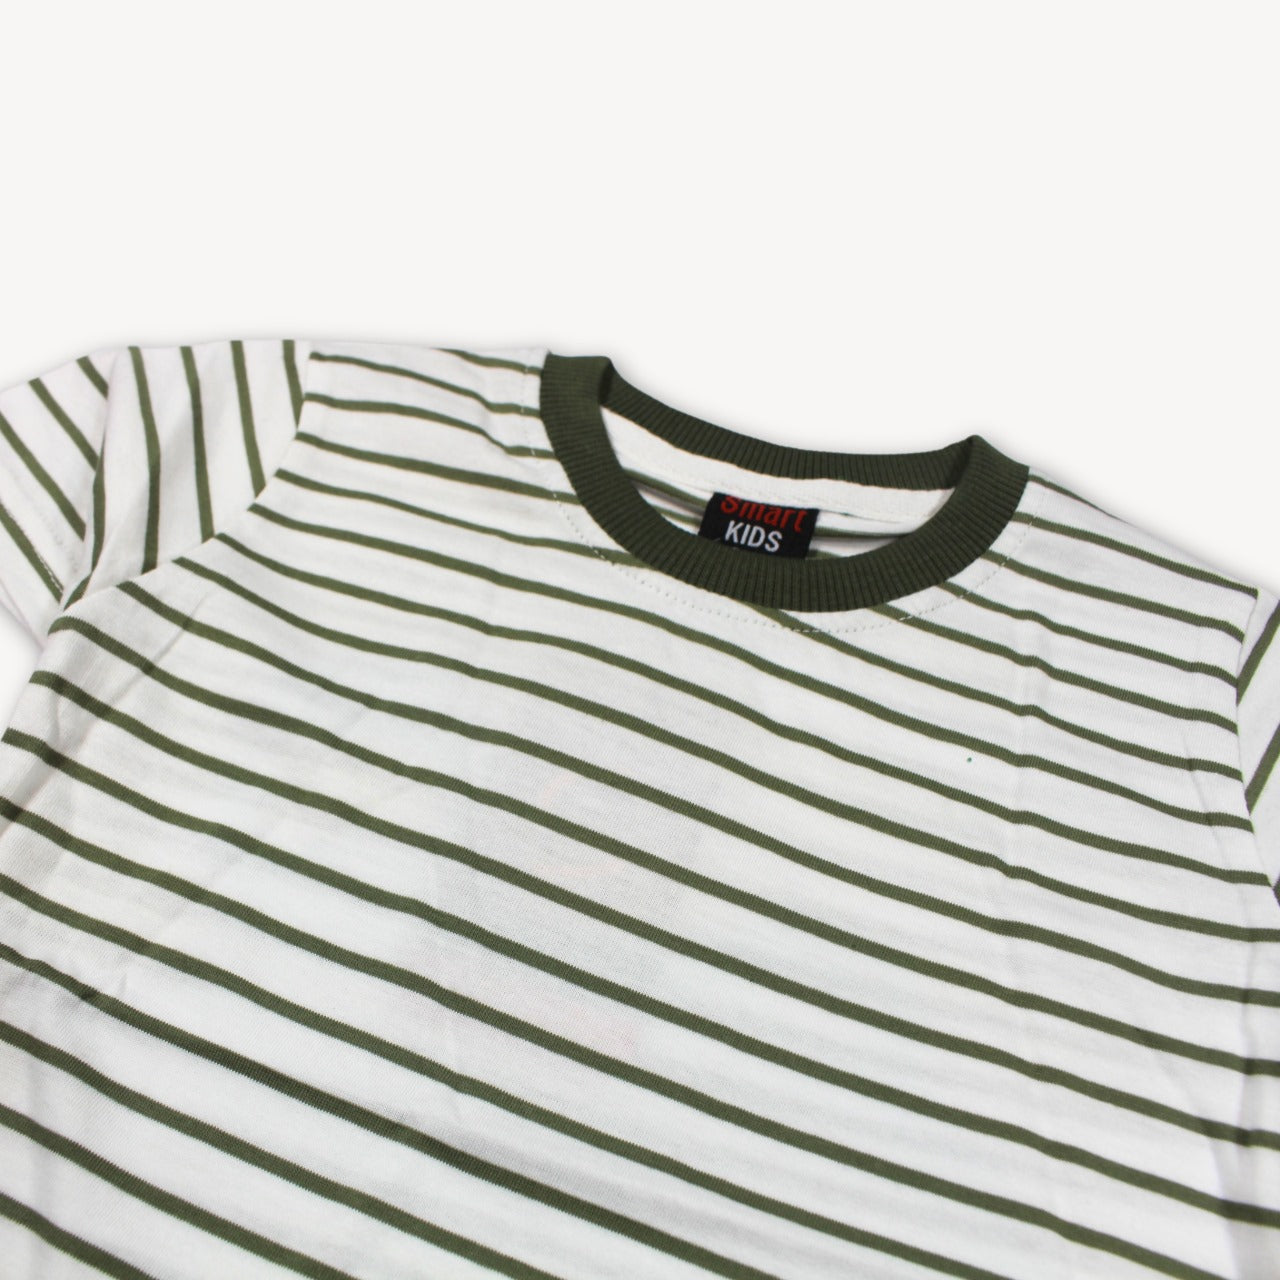 Olive & White Stripe Printed Cotton T-Shirt